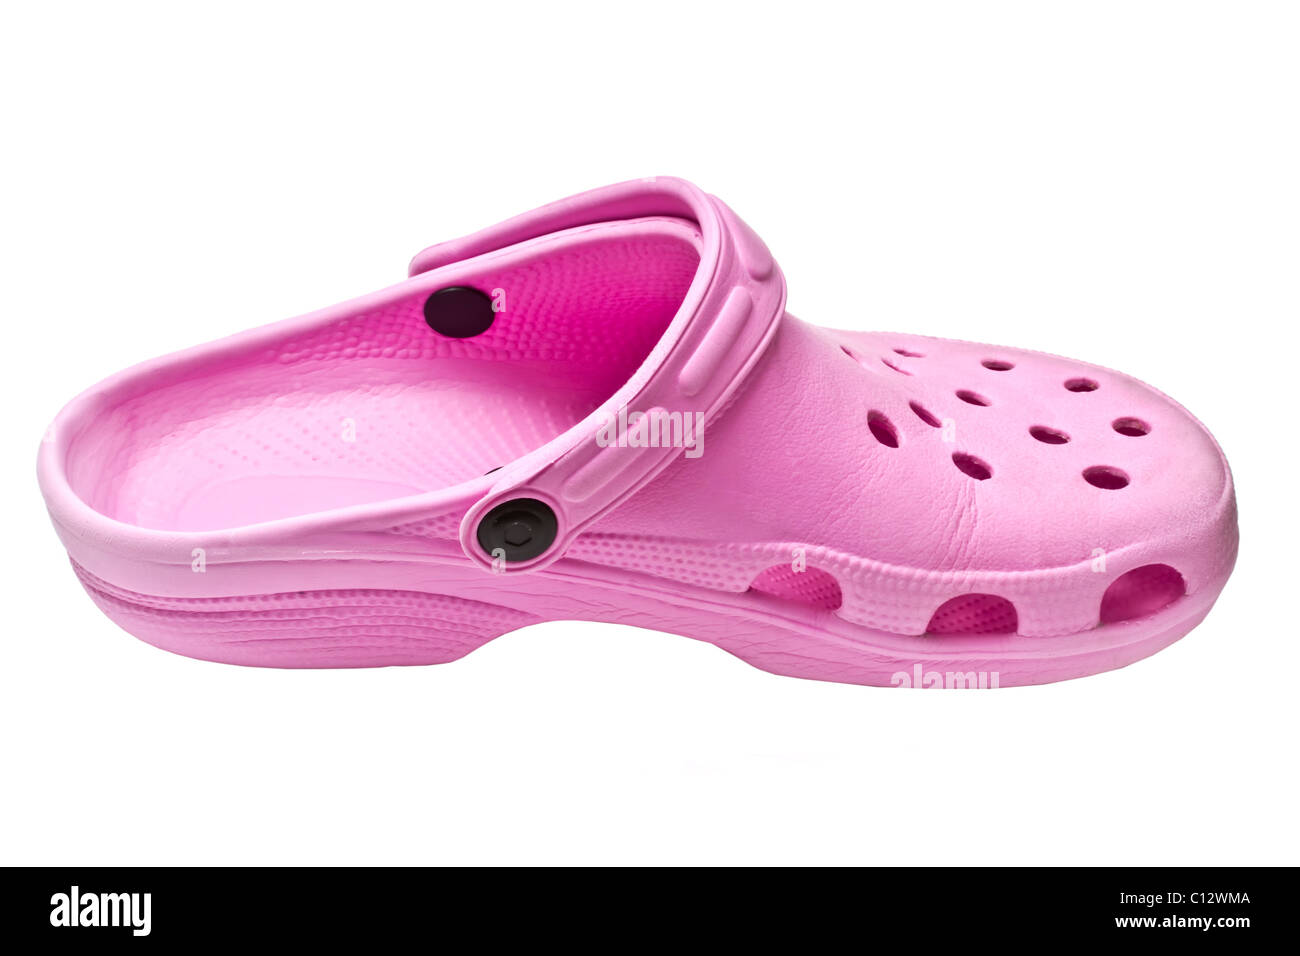 Pink summer shoe isolated on white background Stock Photo